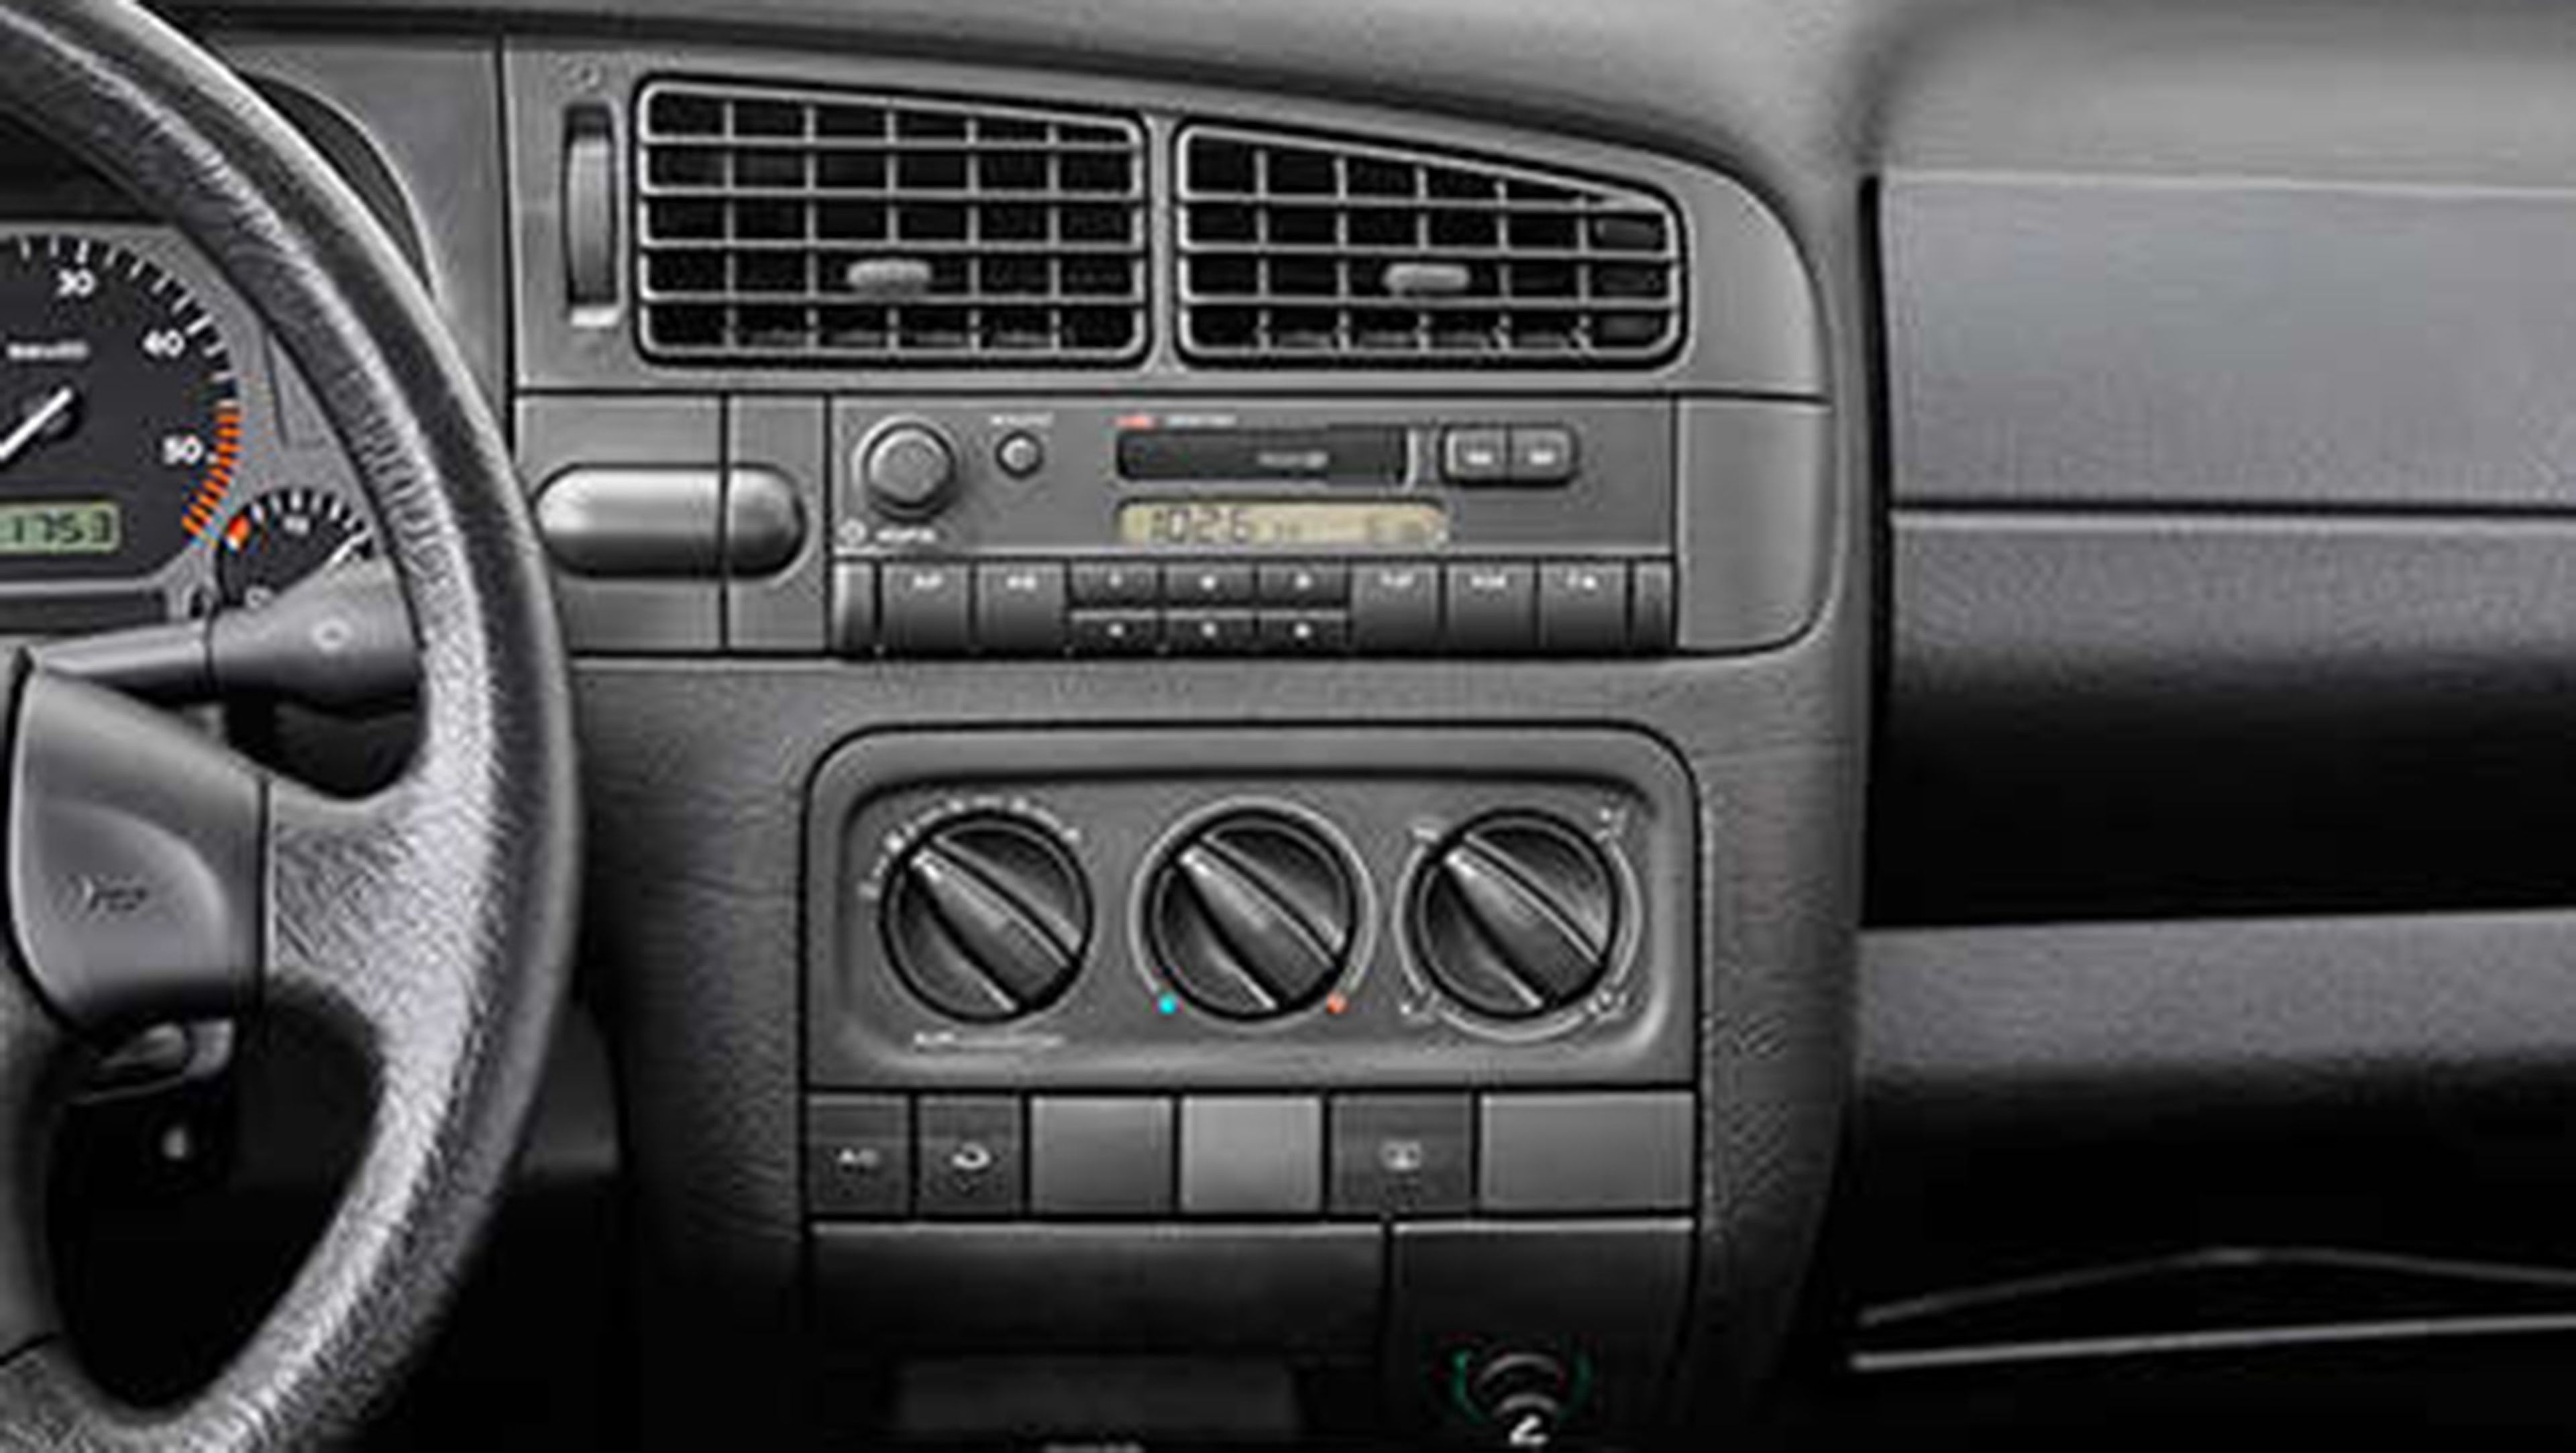 Golf Mk3 radio